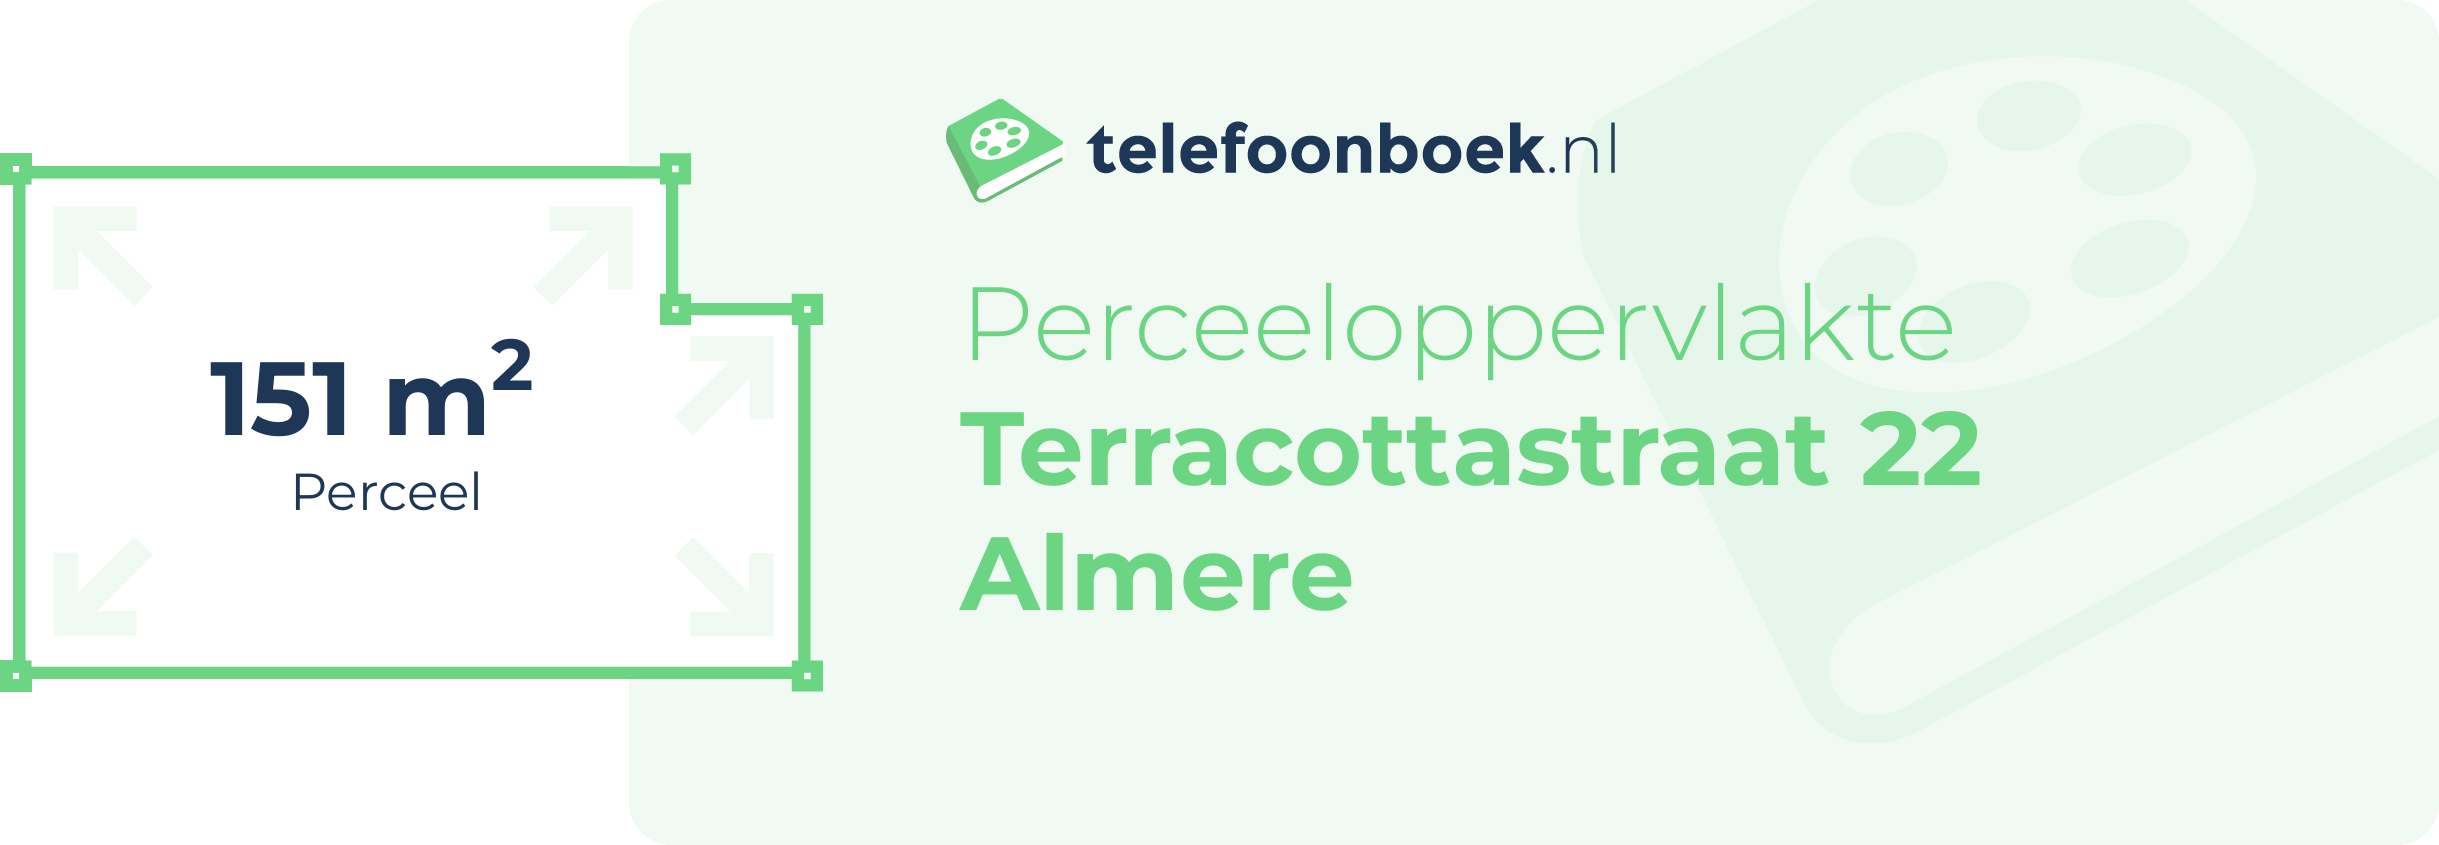 Perceeloppervlakte Terracottastraat 22 Almere